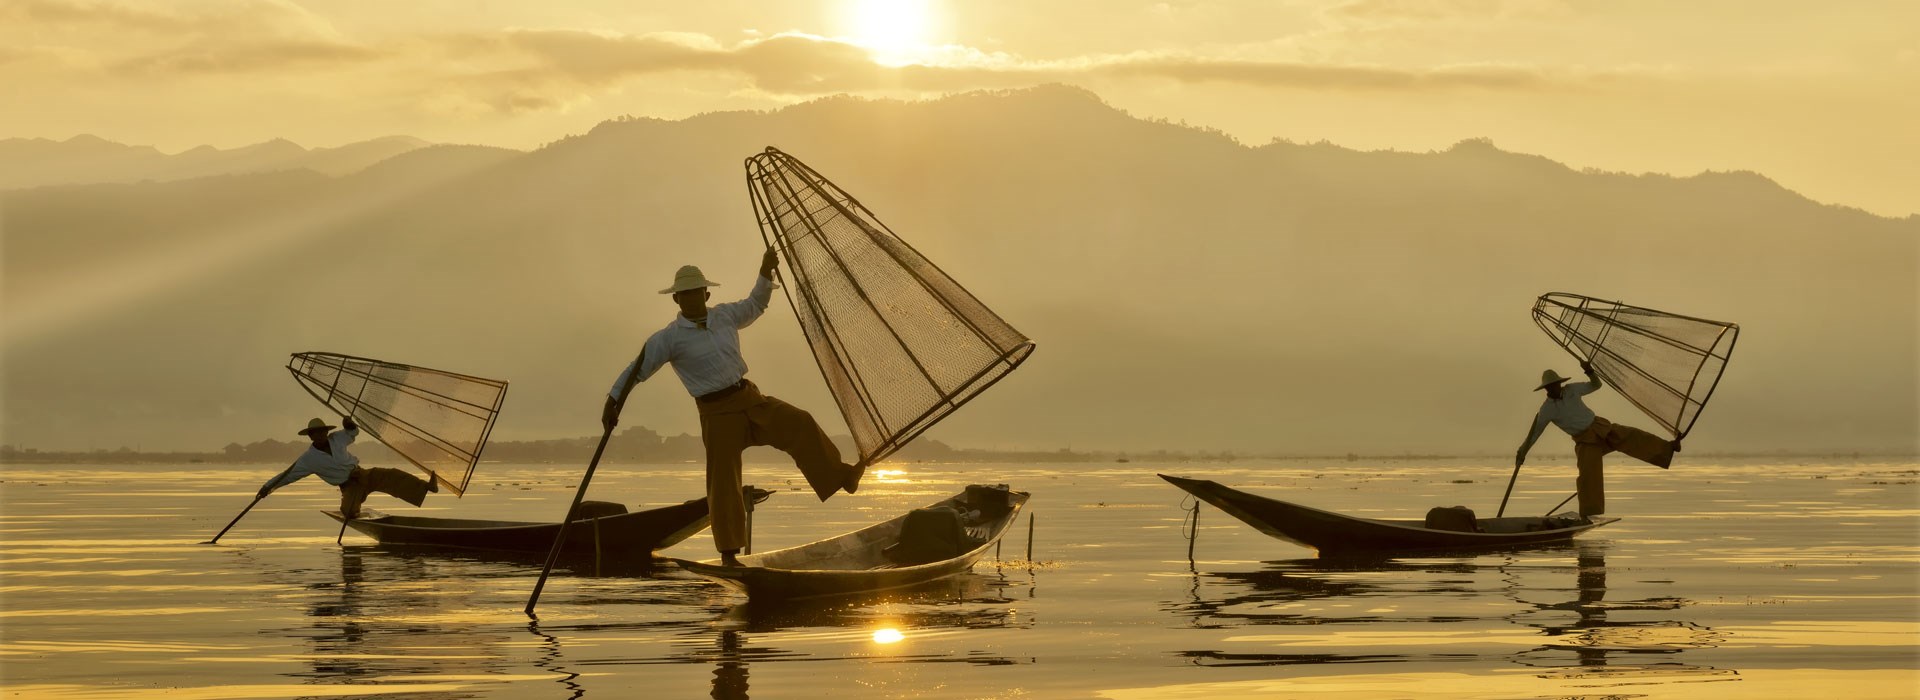 Visiter Le Lac Inle - Birmanie